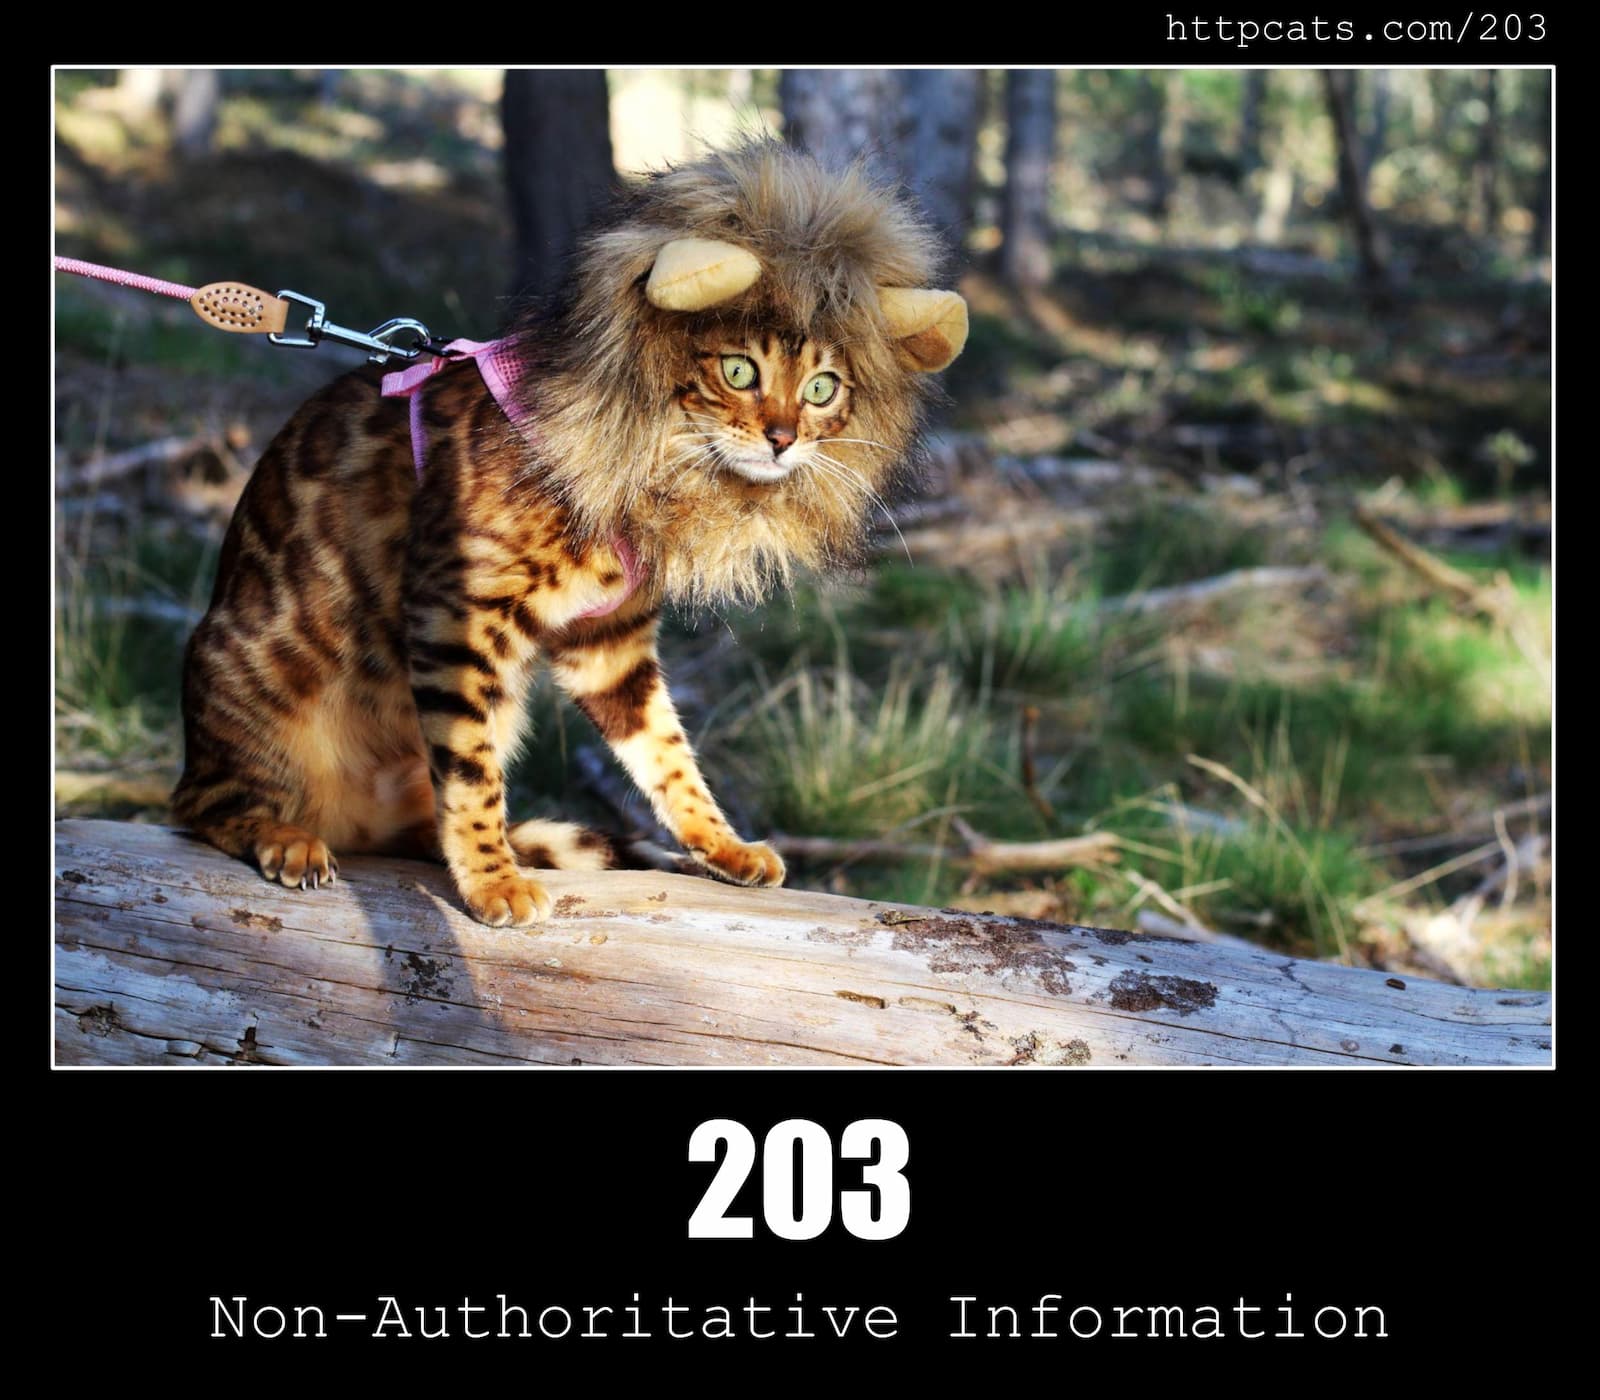 HTTP Status Code 203 Non-Authoritative Information & Cats